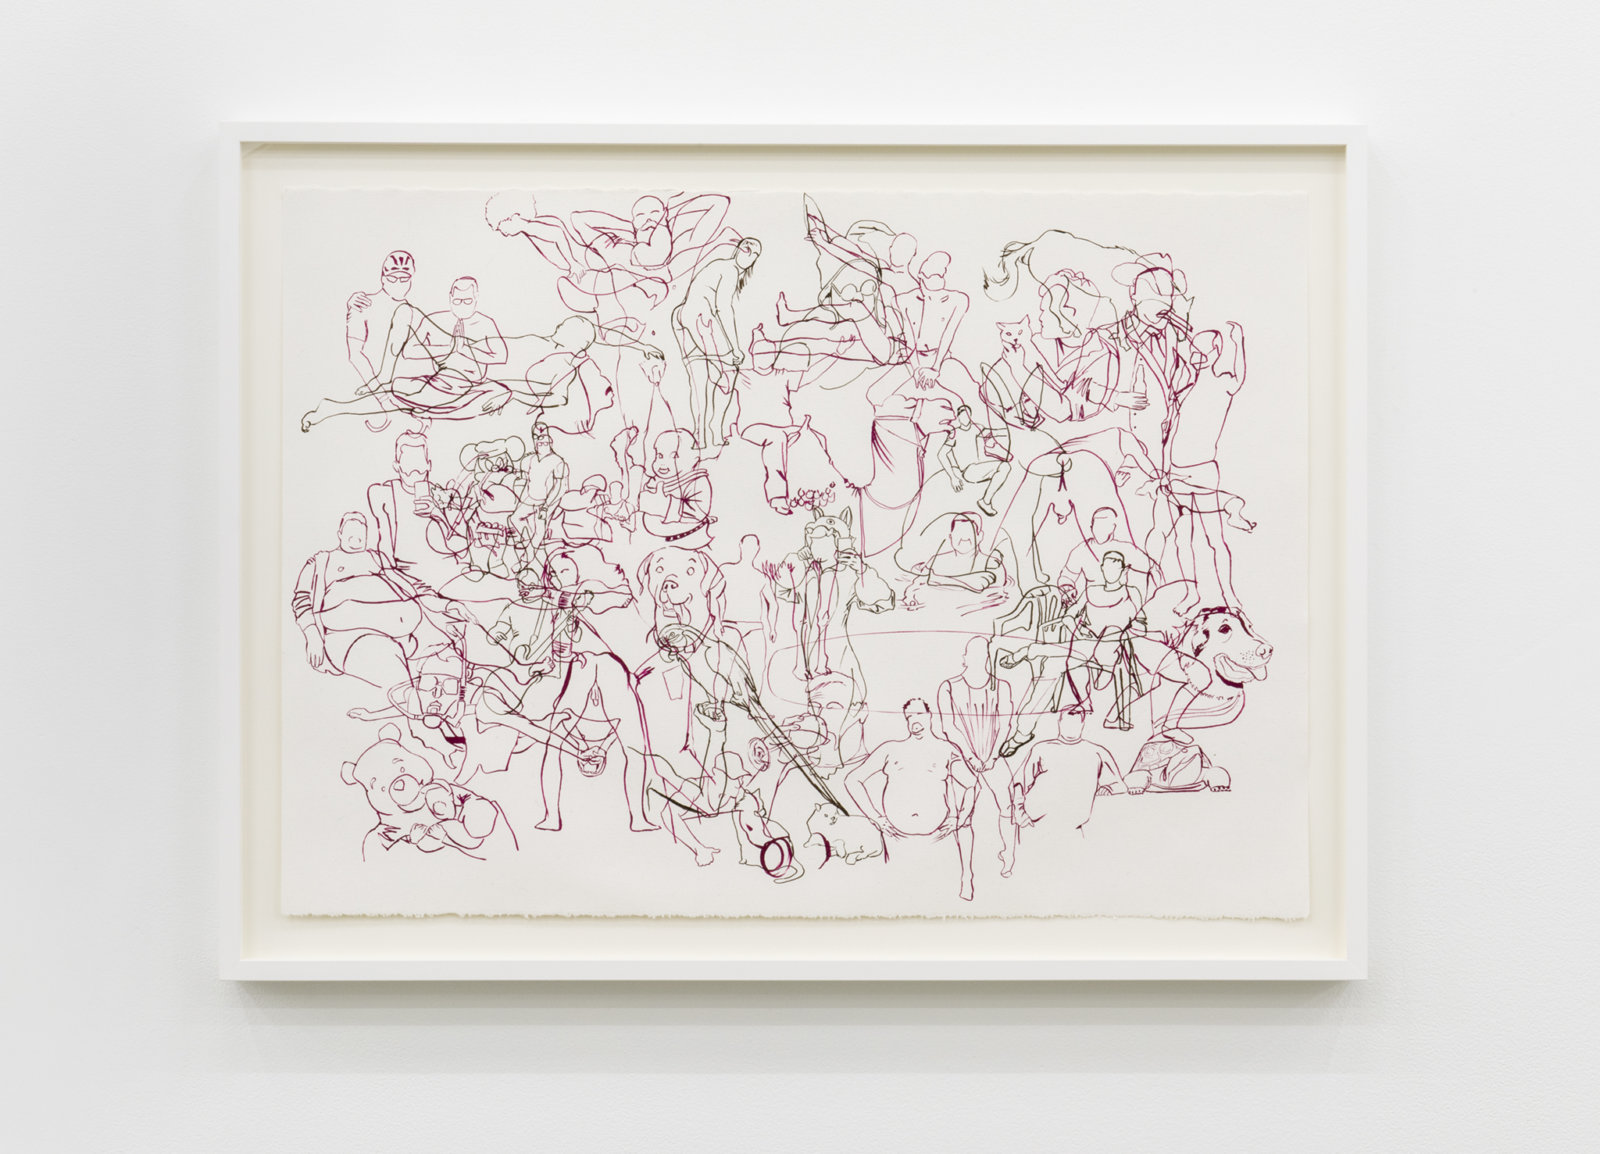 Brian Jungen, Untitled, 2017, felt marker on paper, 21 x 30 in. (52 x 75 cm)